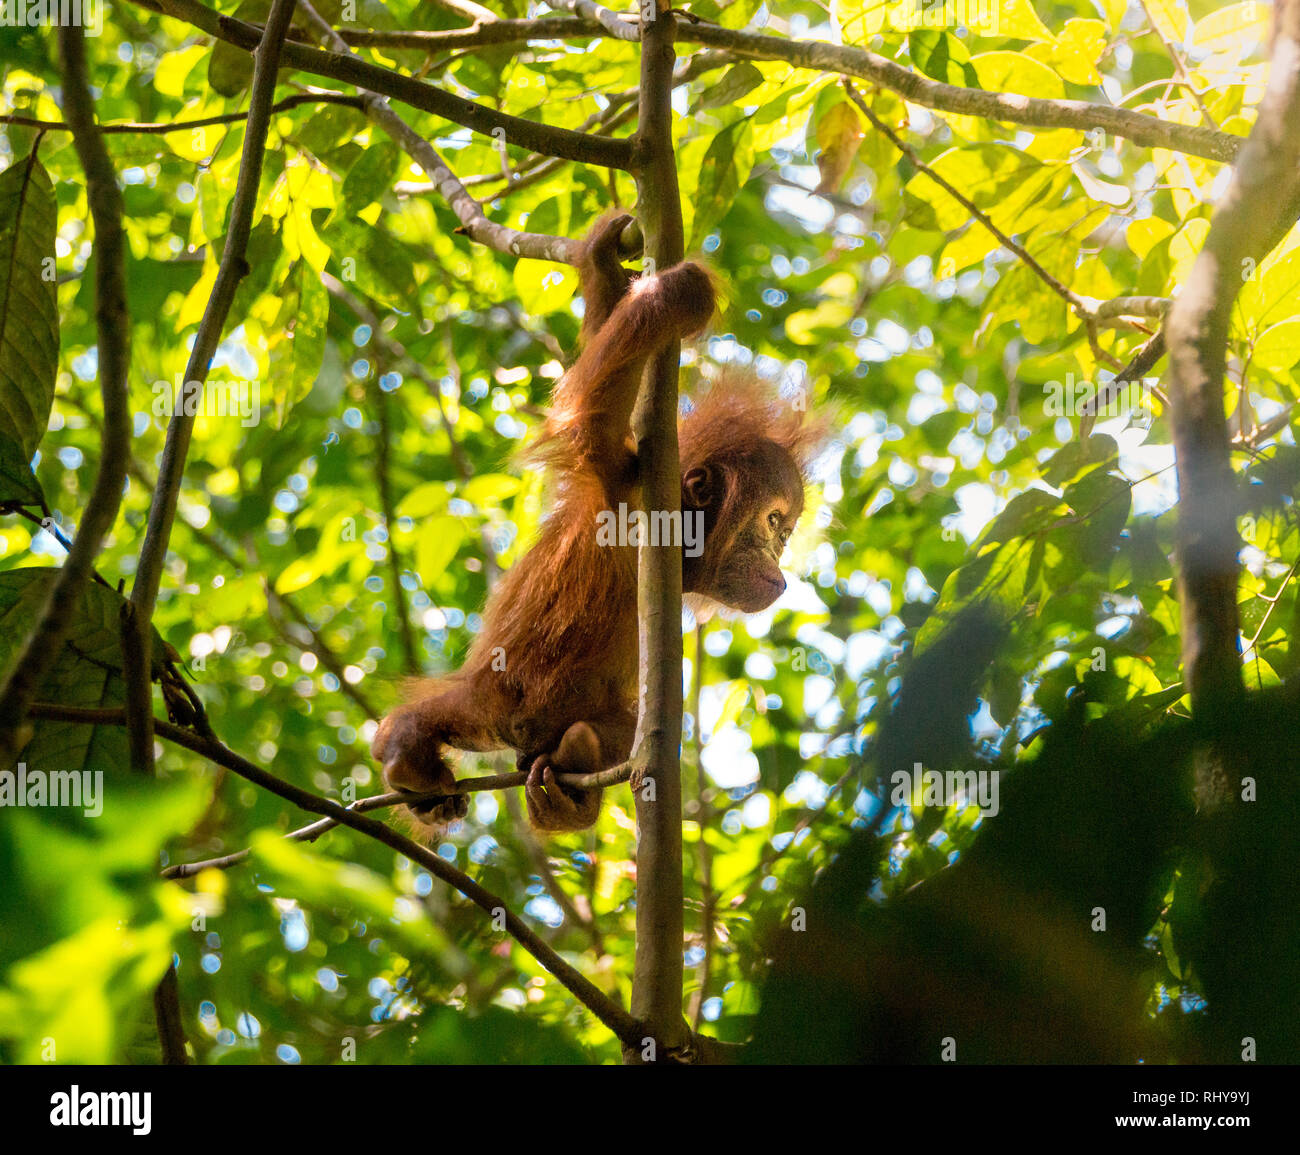 a cute baby orangutan in the Forests of Bukit Lawang on Sumatra Stock Photo